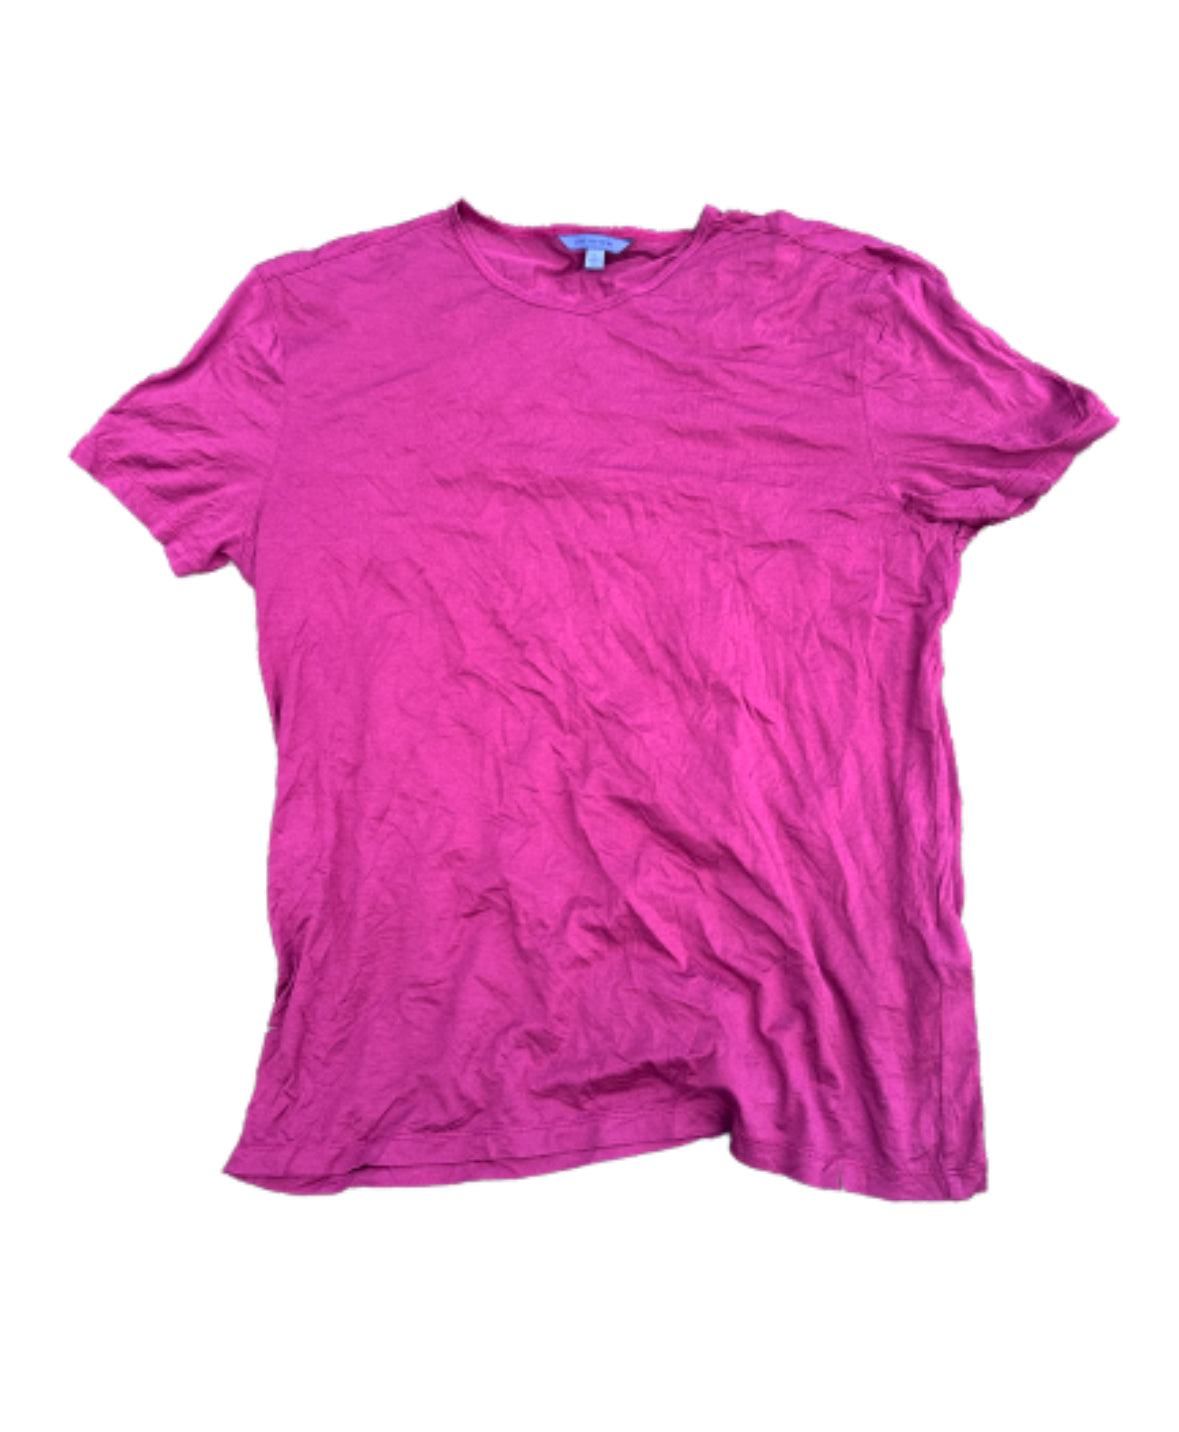 BALLERS: Spencer's JOHN VARVATOS Pink Purple full neck Short sleeve shirt (XL)